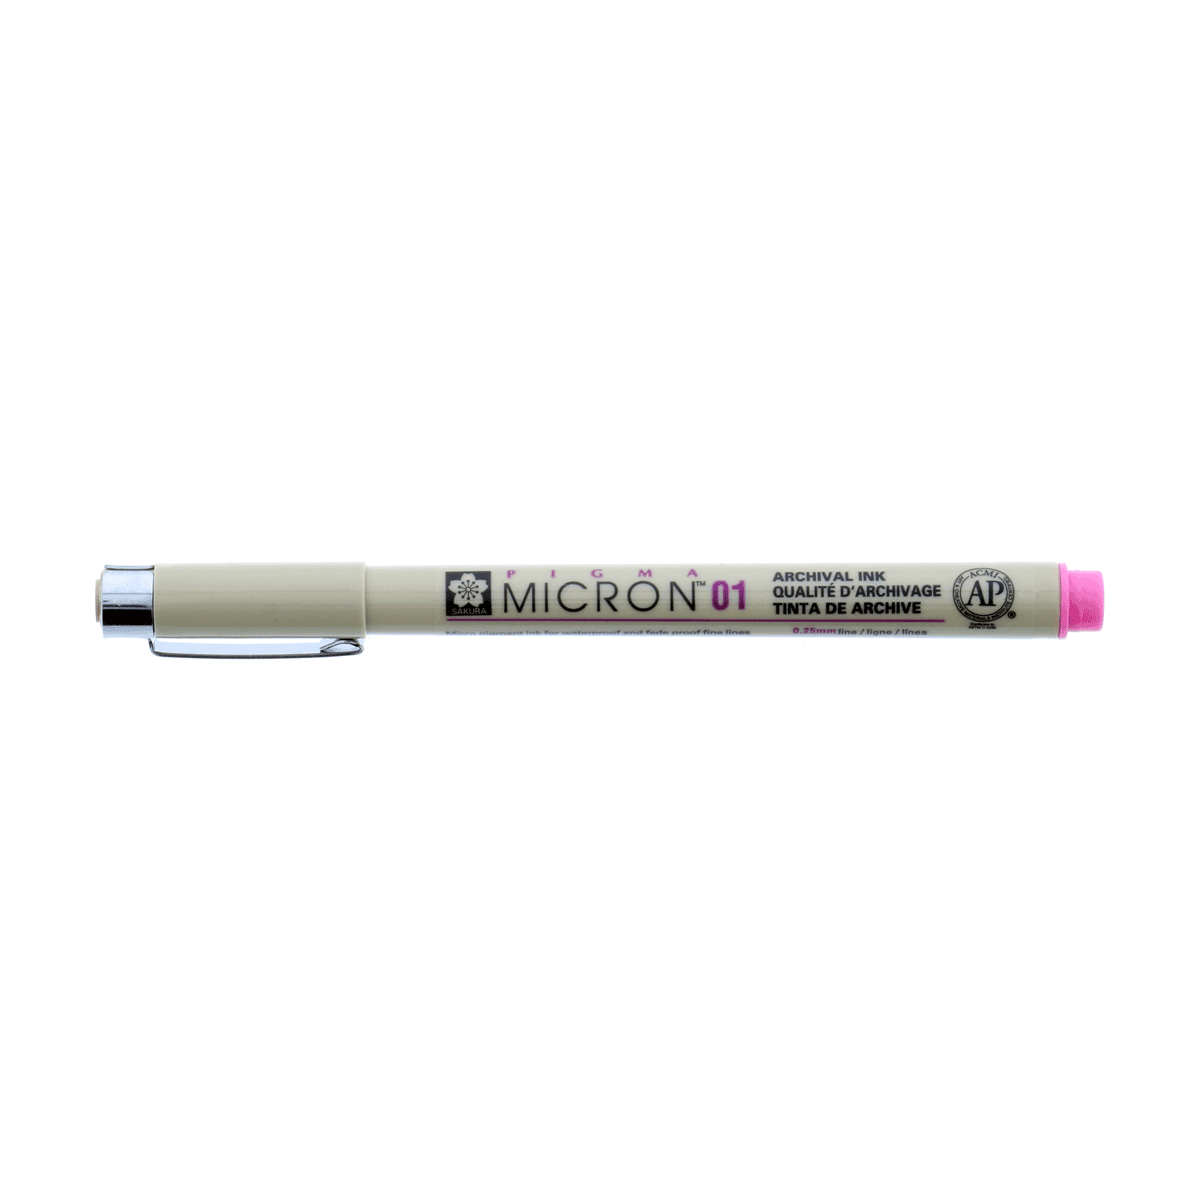 Micron Pigma Pen - Rose 01 .25mm Line